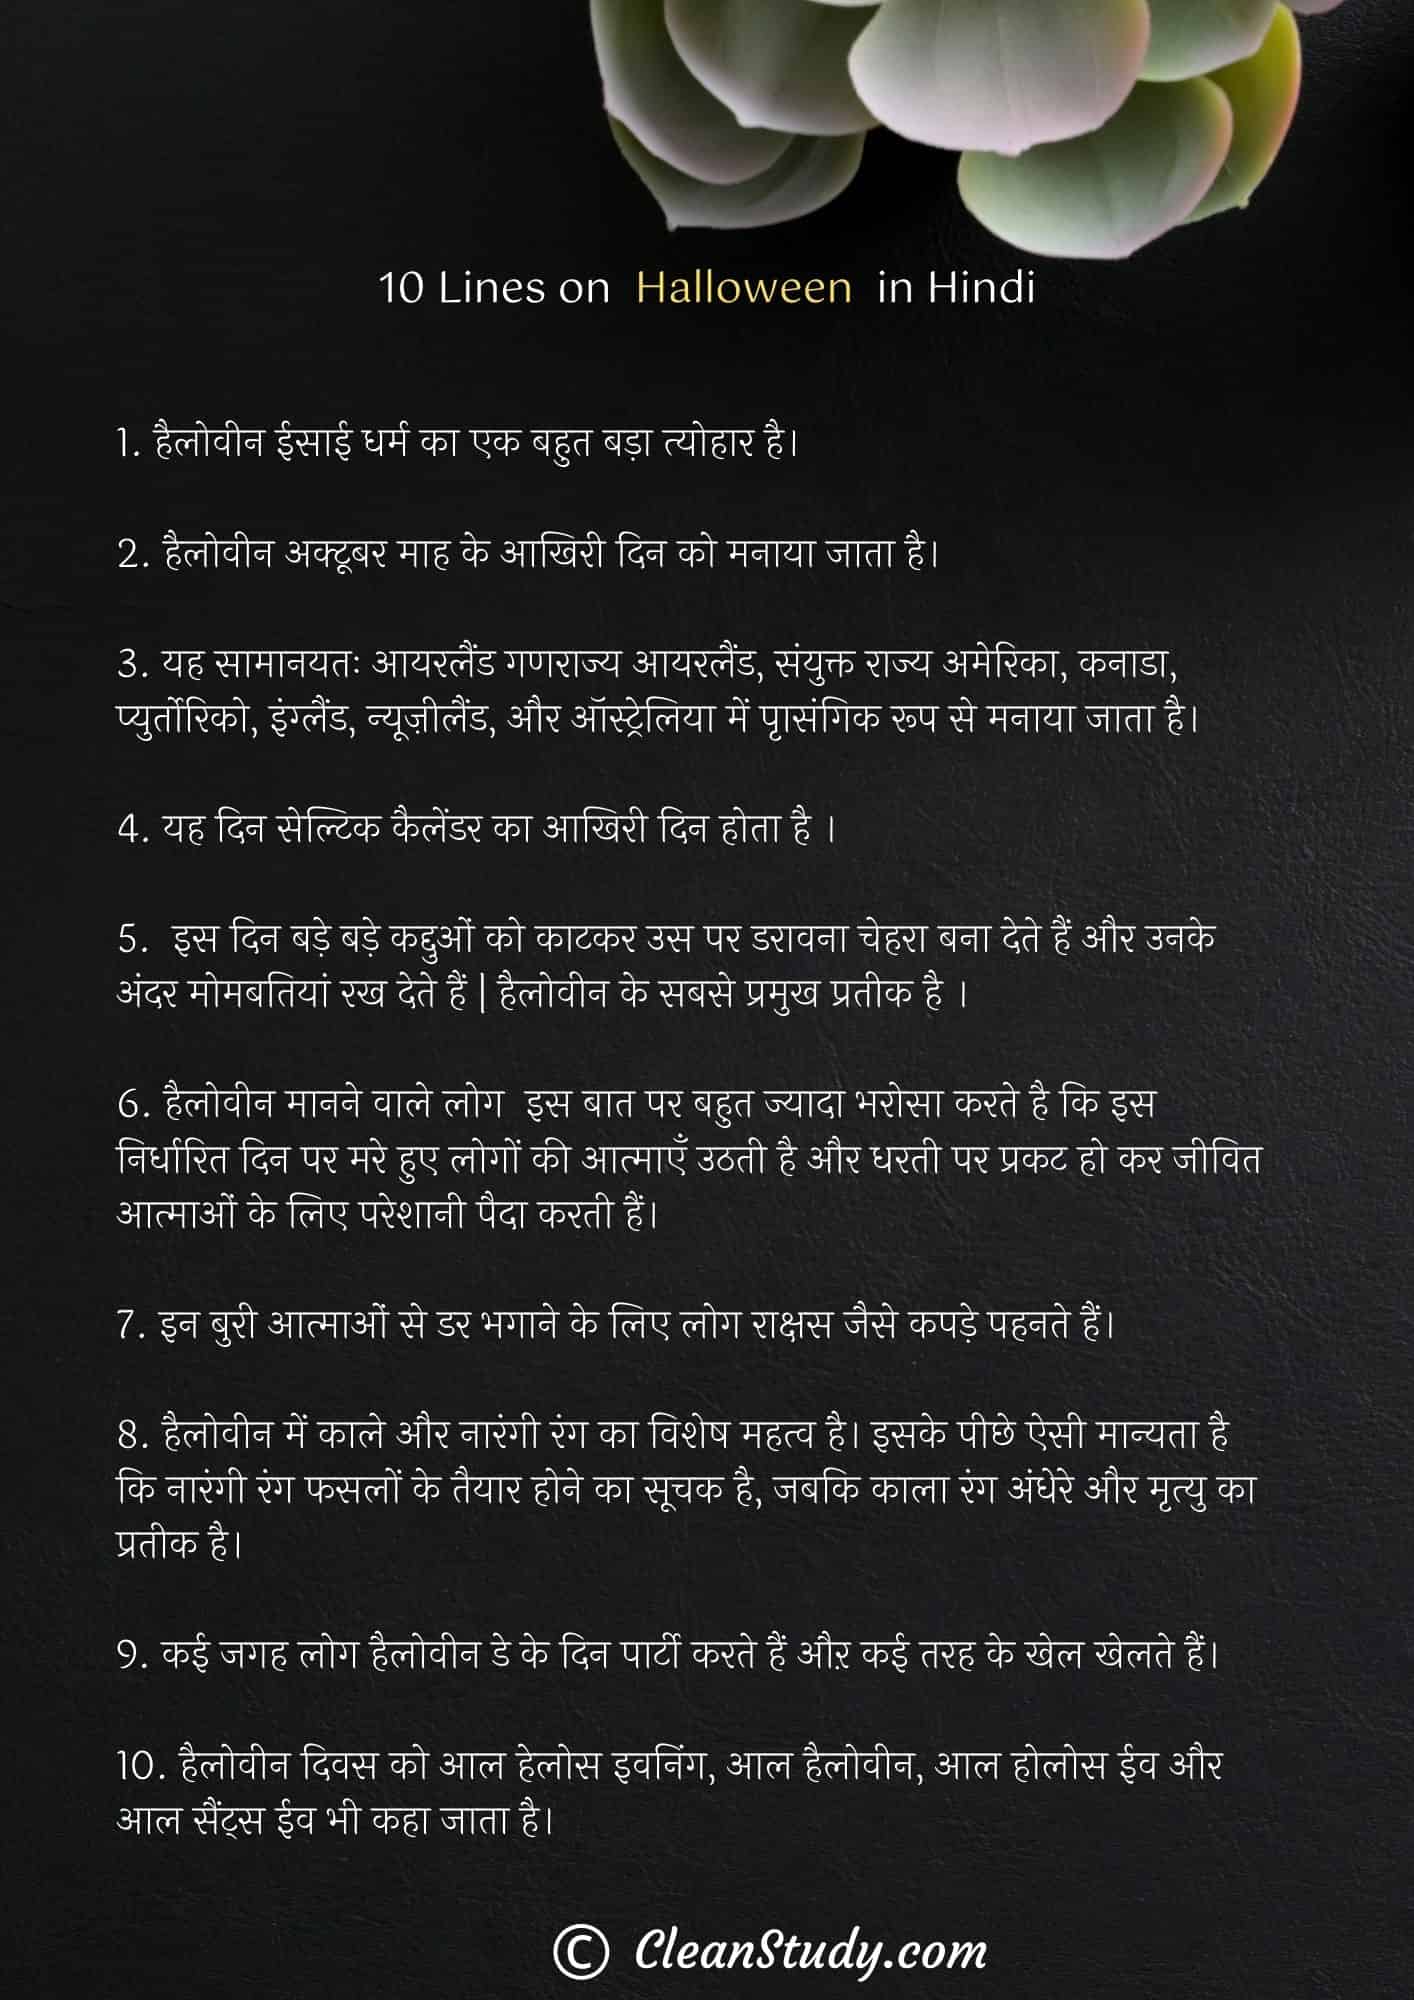 10 Lines on Halloween in Hindi